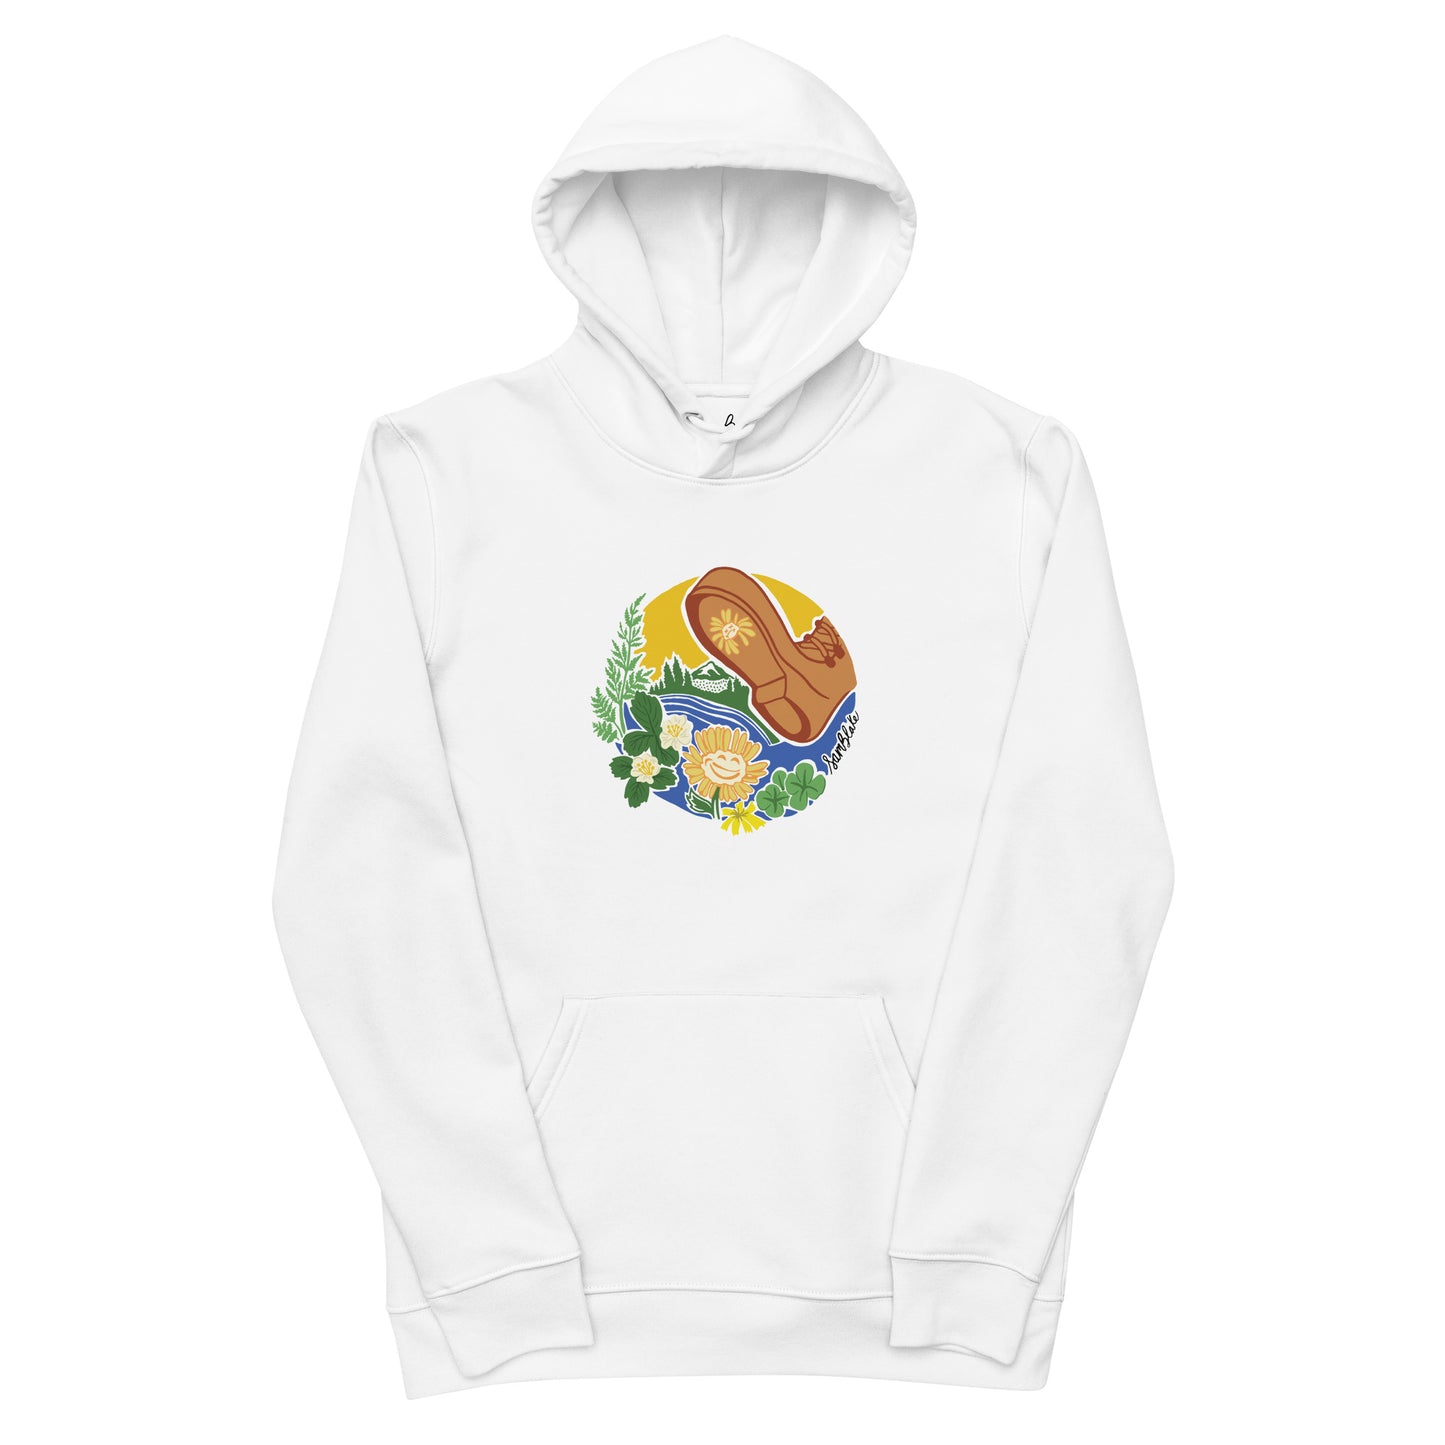 Tread Lightly- Unisex organic hoodie